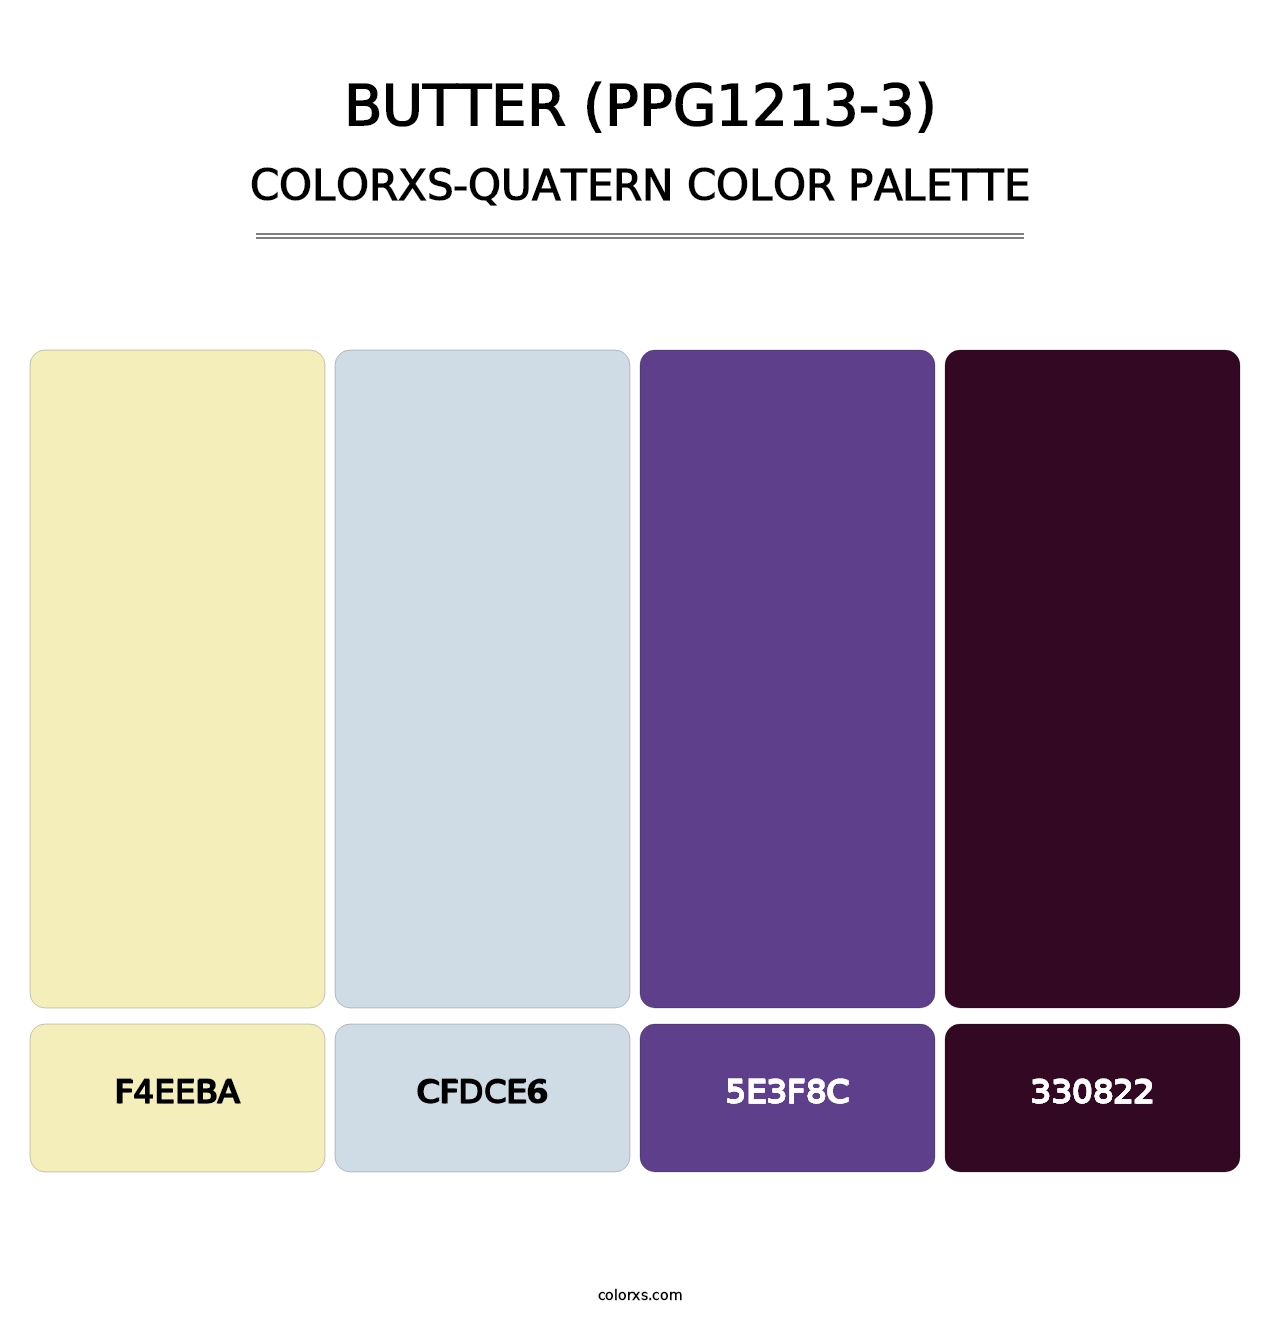 Butter (PPG1213-3) - Colorxs Quatern Palette